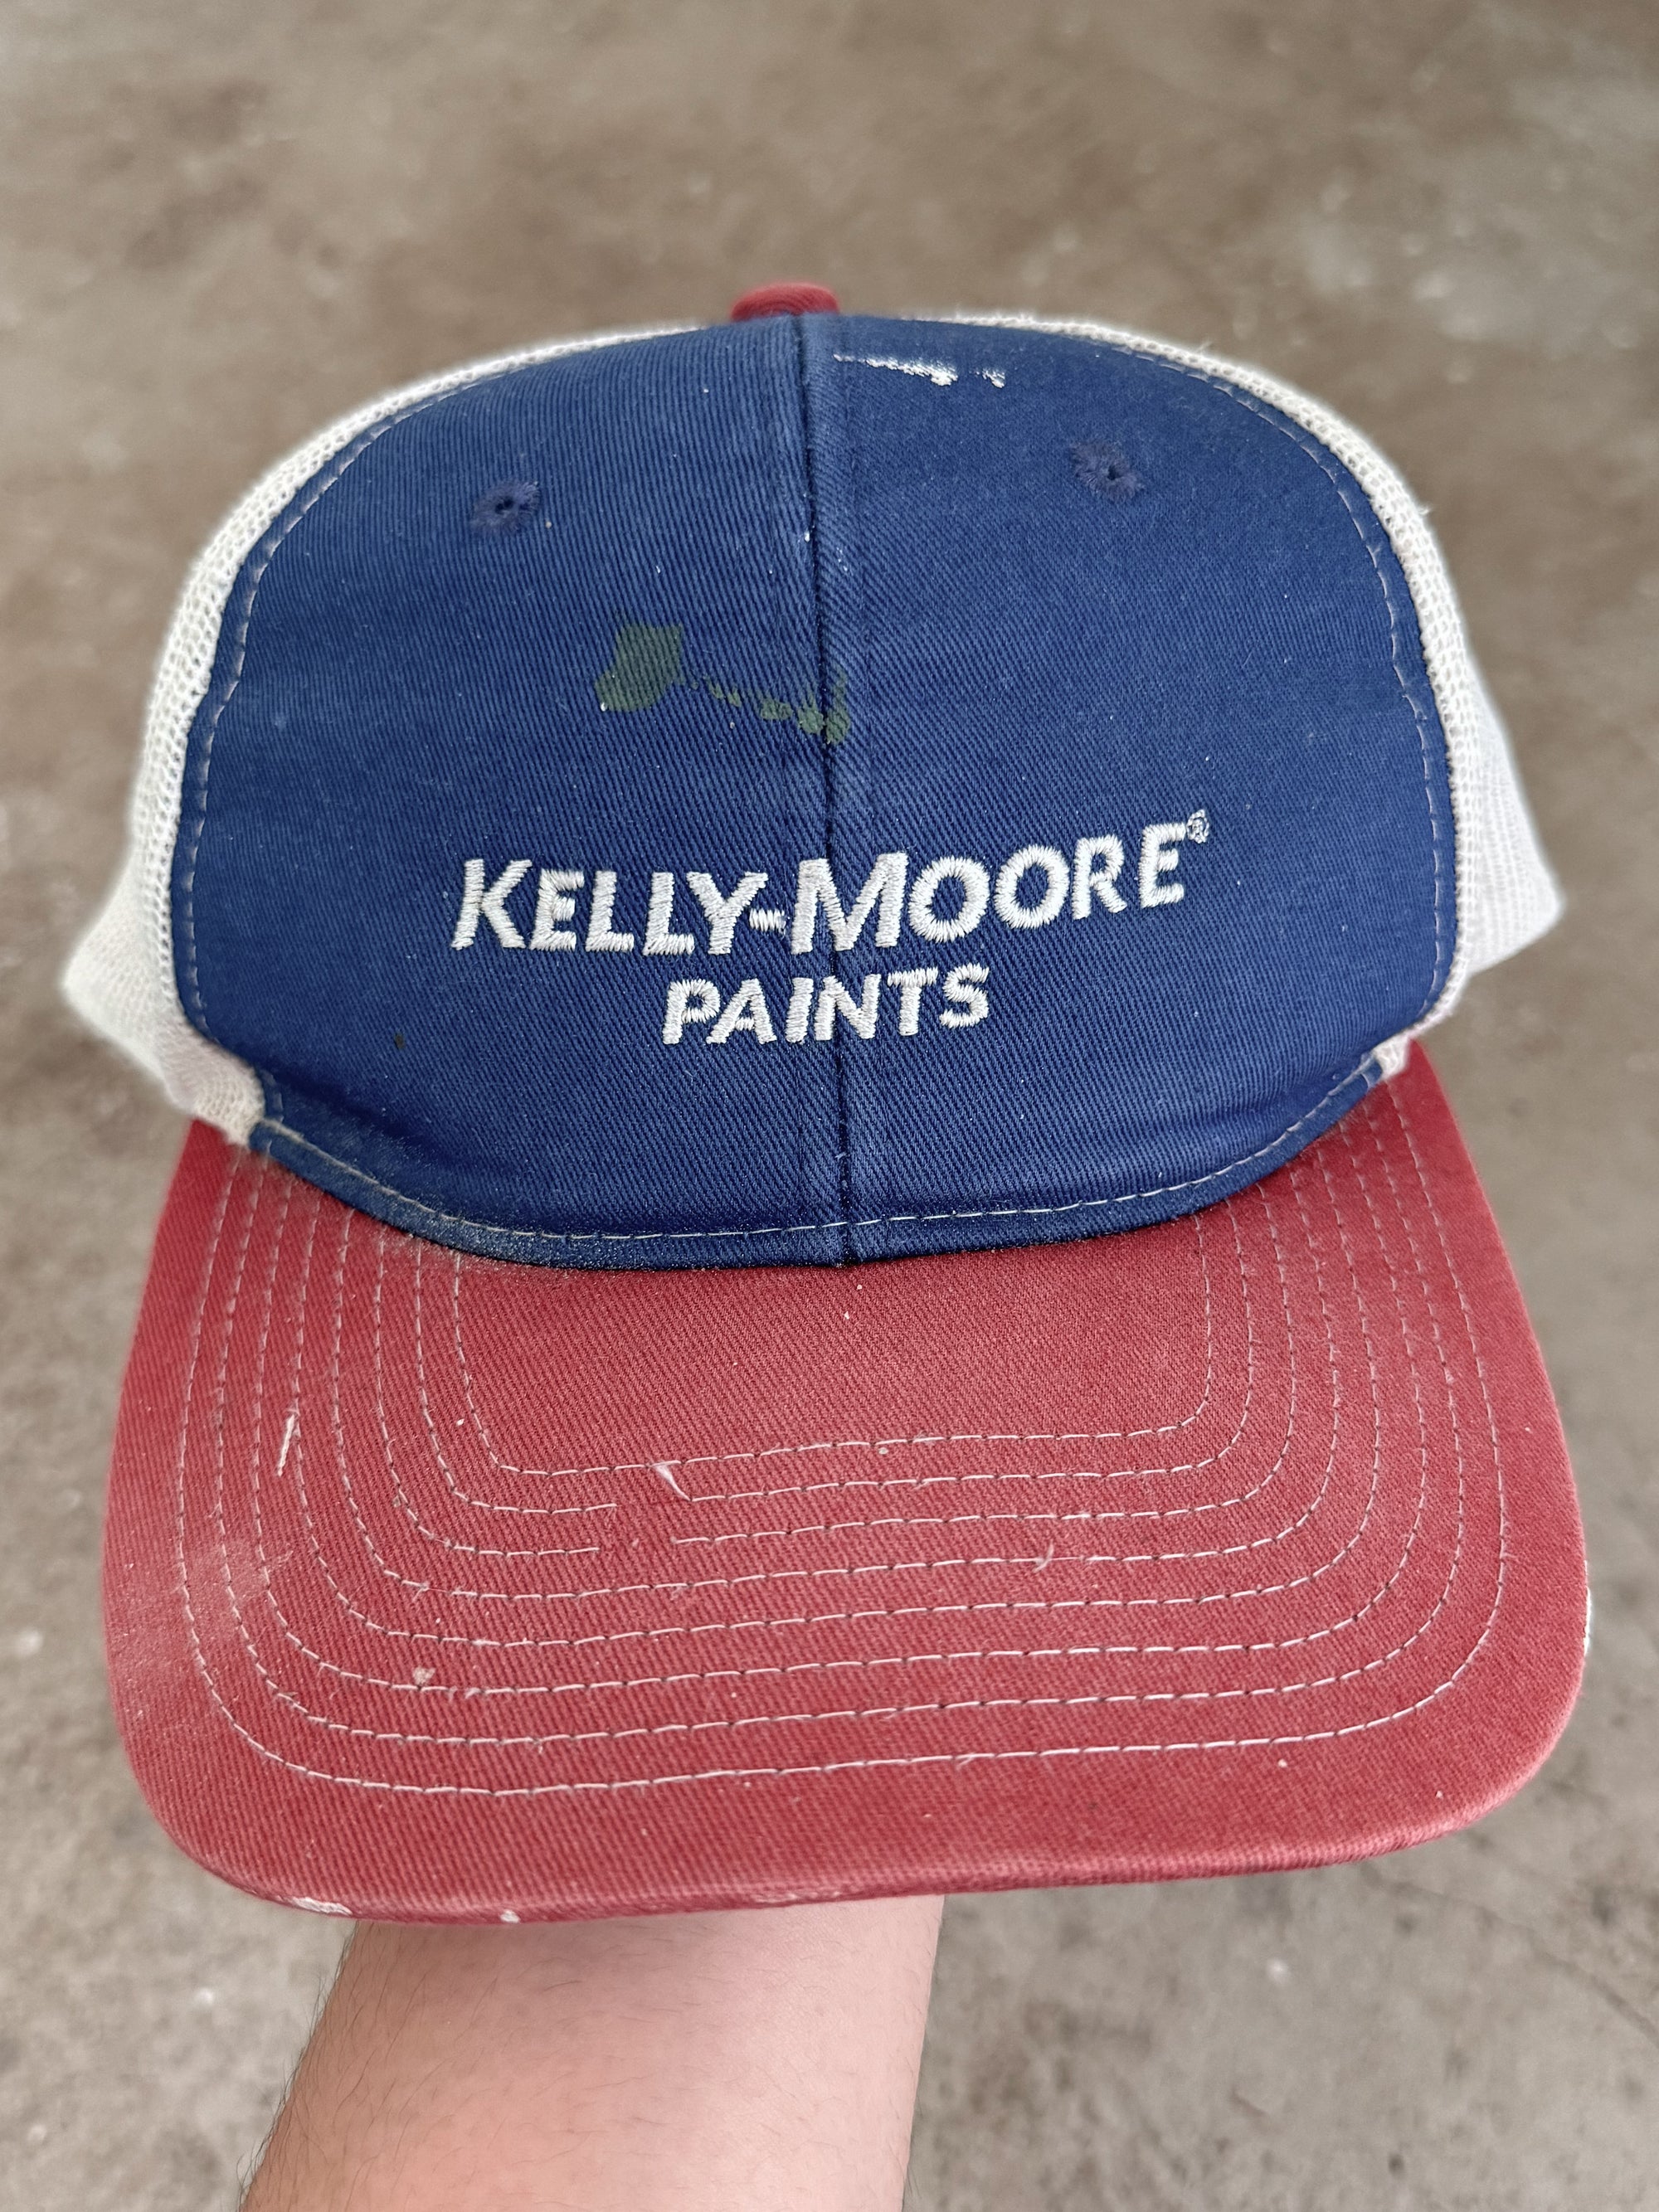 2010s "Kelly Moore Paints" Hat